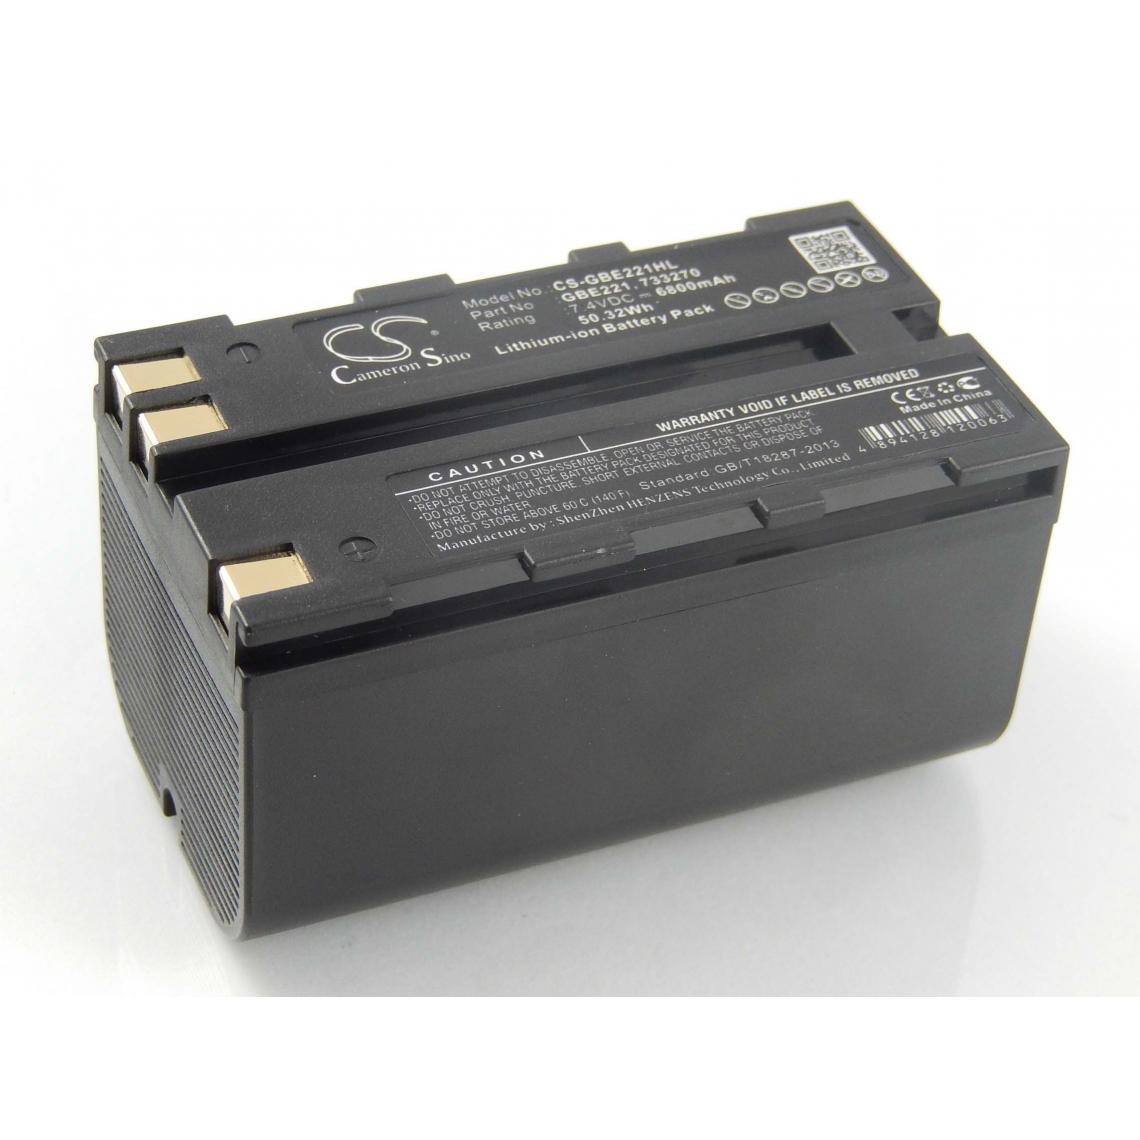 Vhbw - vhbw Batterie compatible avec Leica Piper 200 Laser dispositif de mesure laser, outil de mesure (6800mAh, 7,4V, Li-ion) - Piles rechargeables